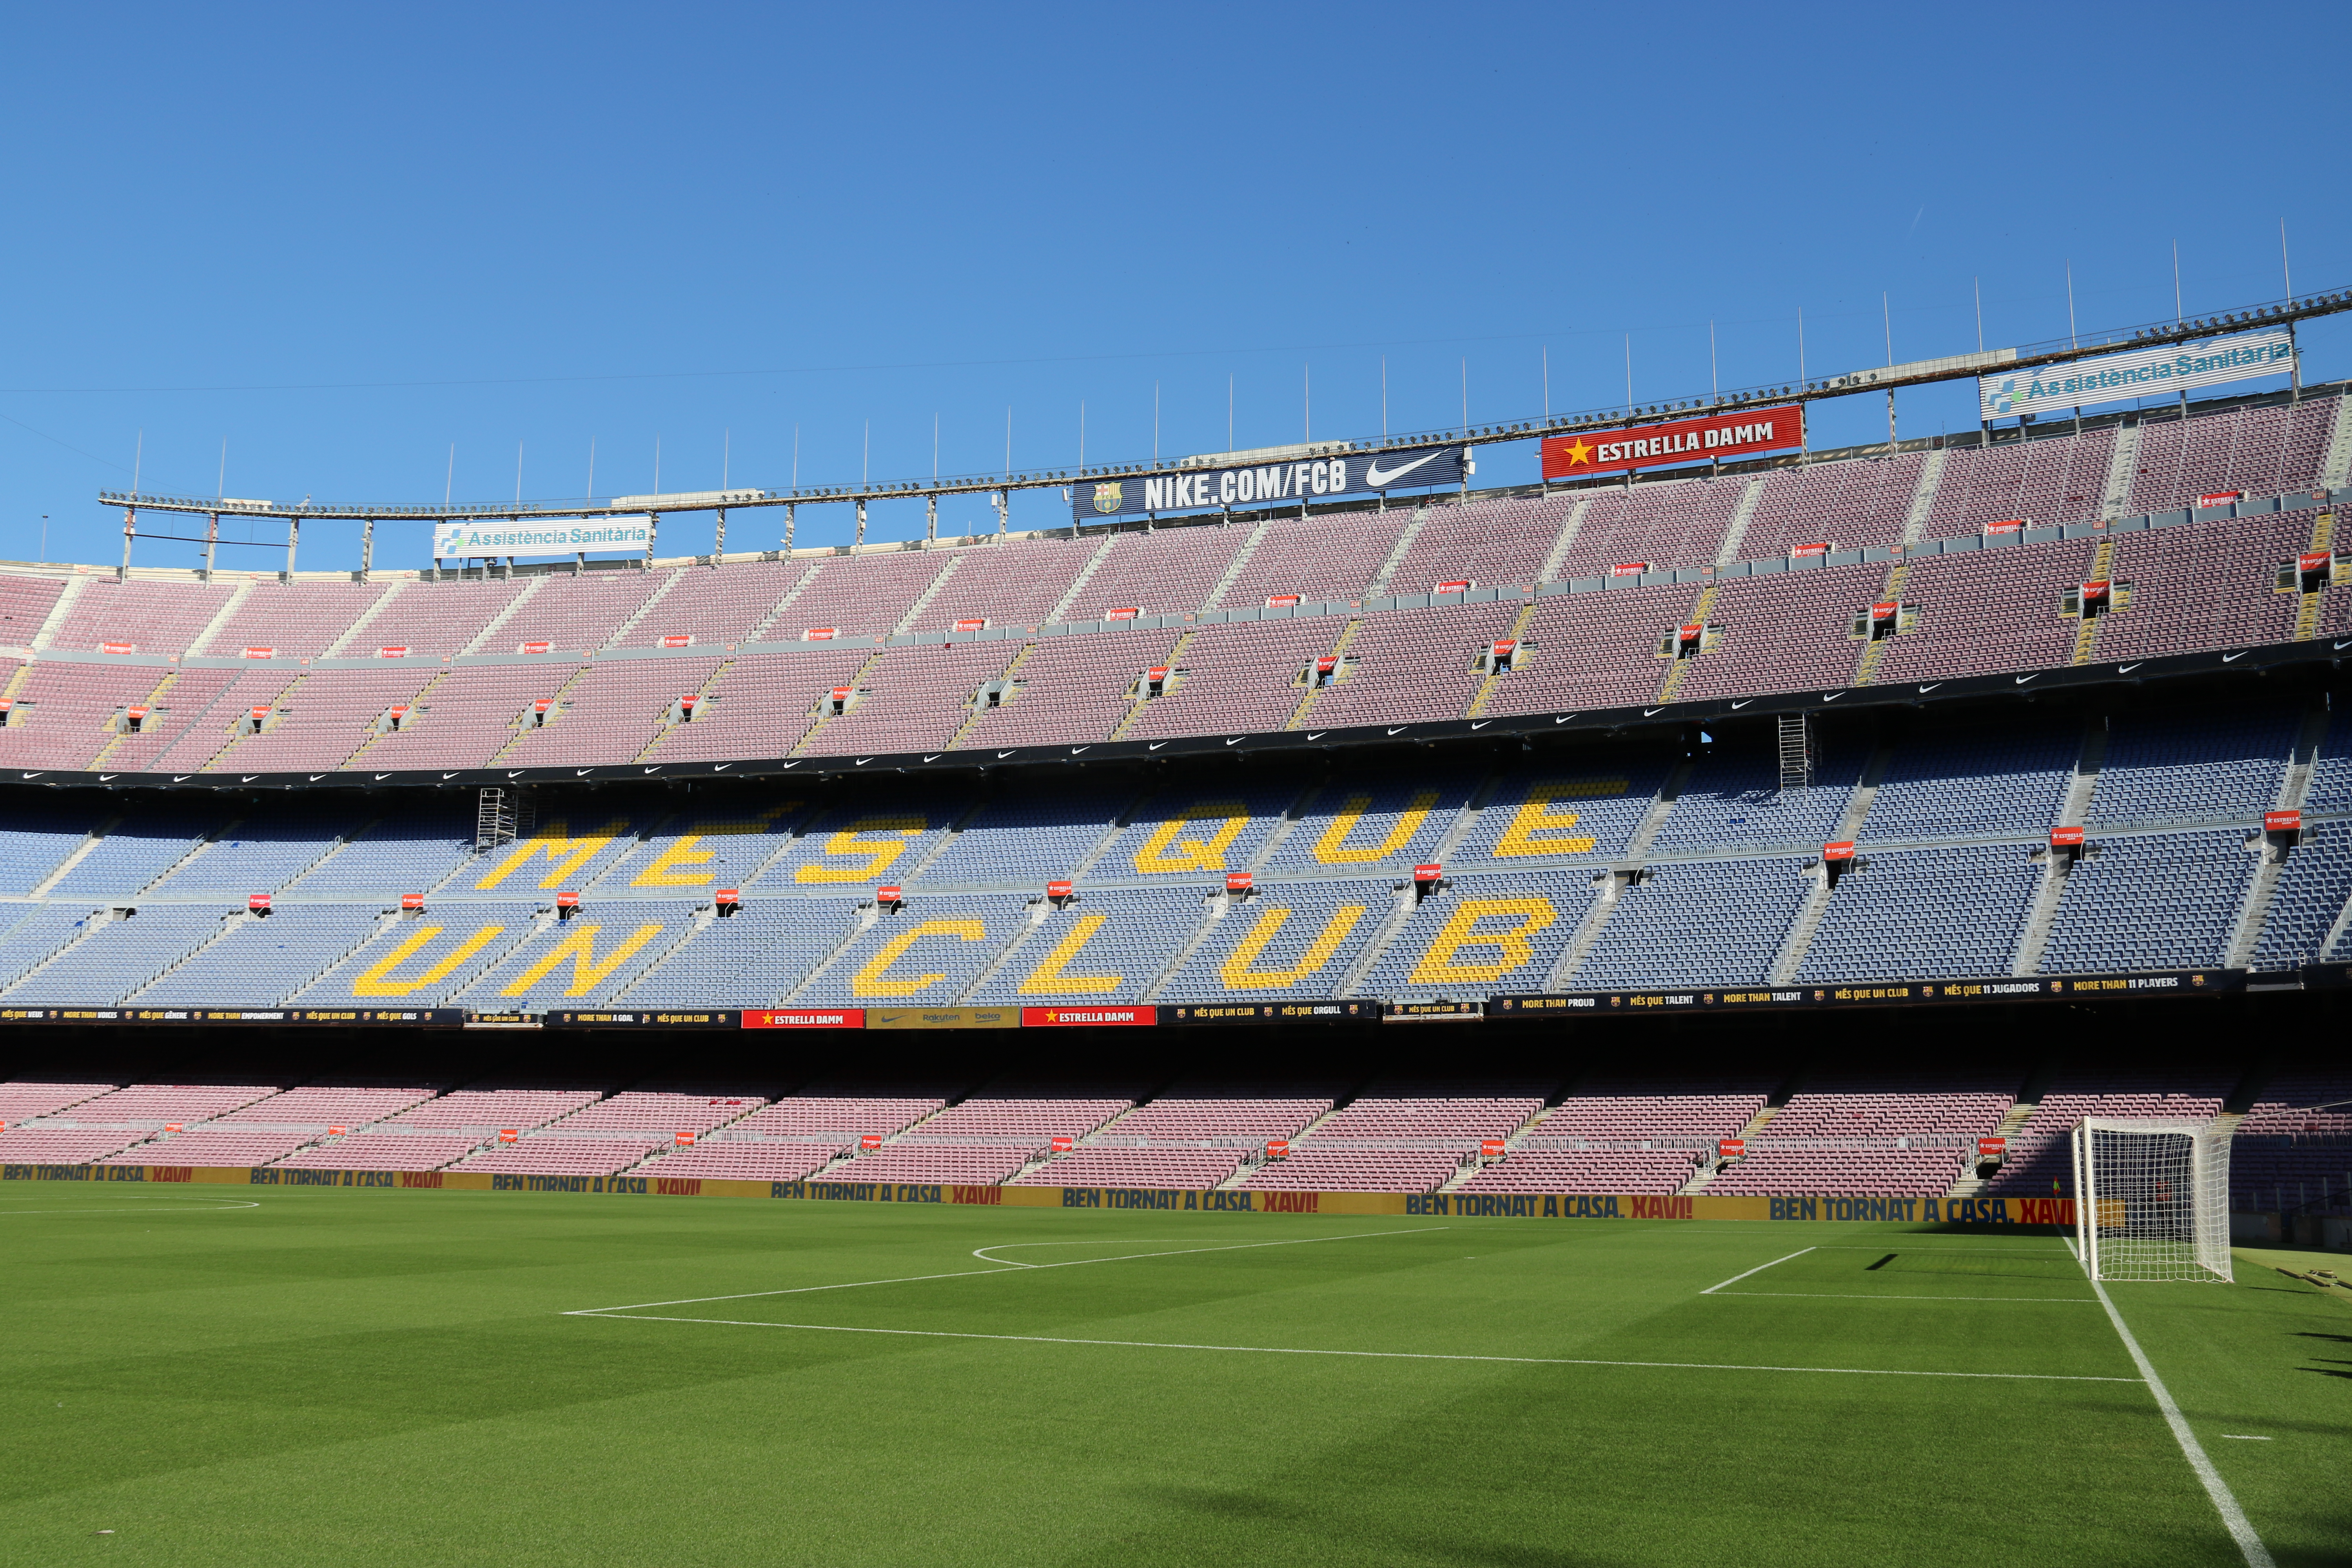 FC Barcelona's Camp Nou stadium (by Cillian Shields)